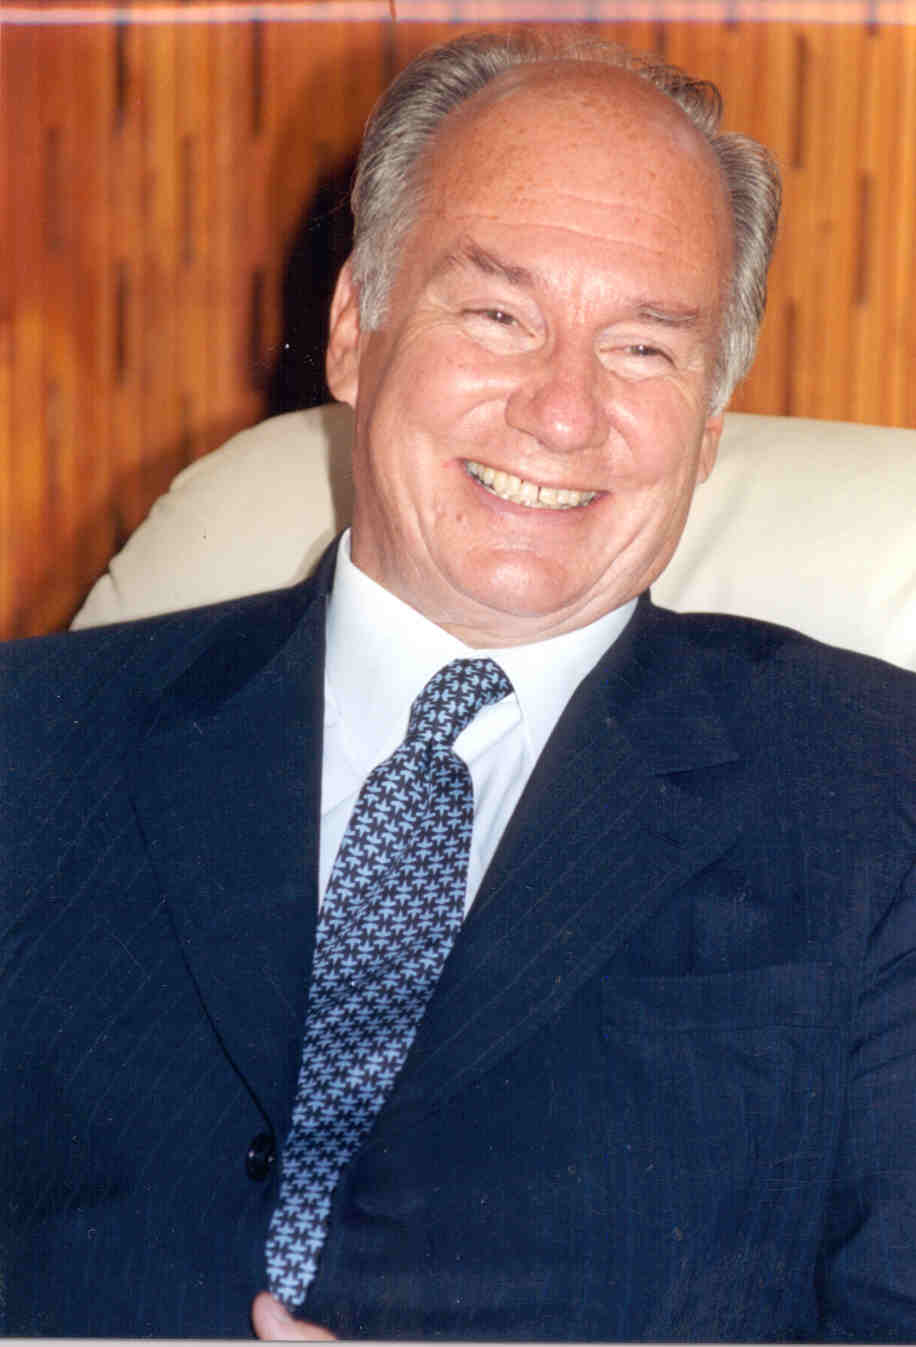 2001-tanzania-pic6 - Prince Karim Aga Khan